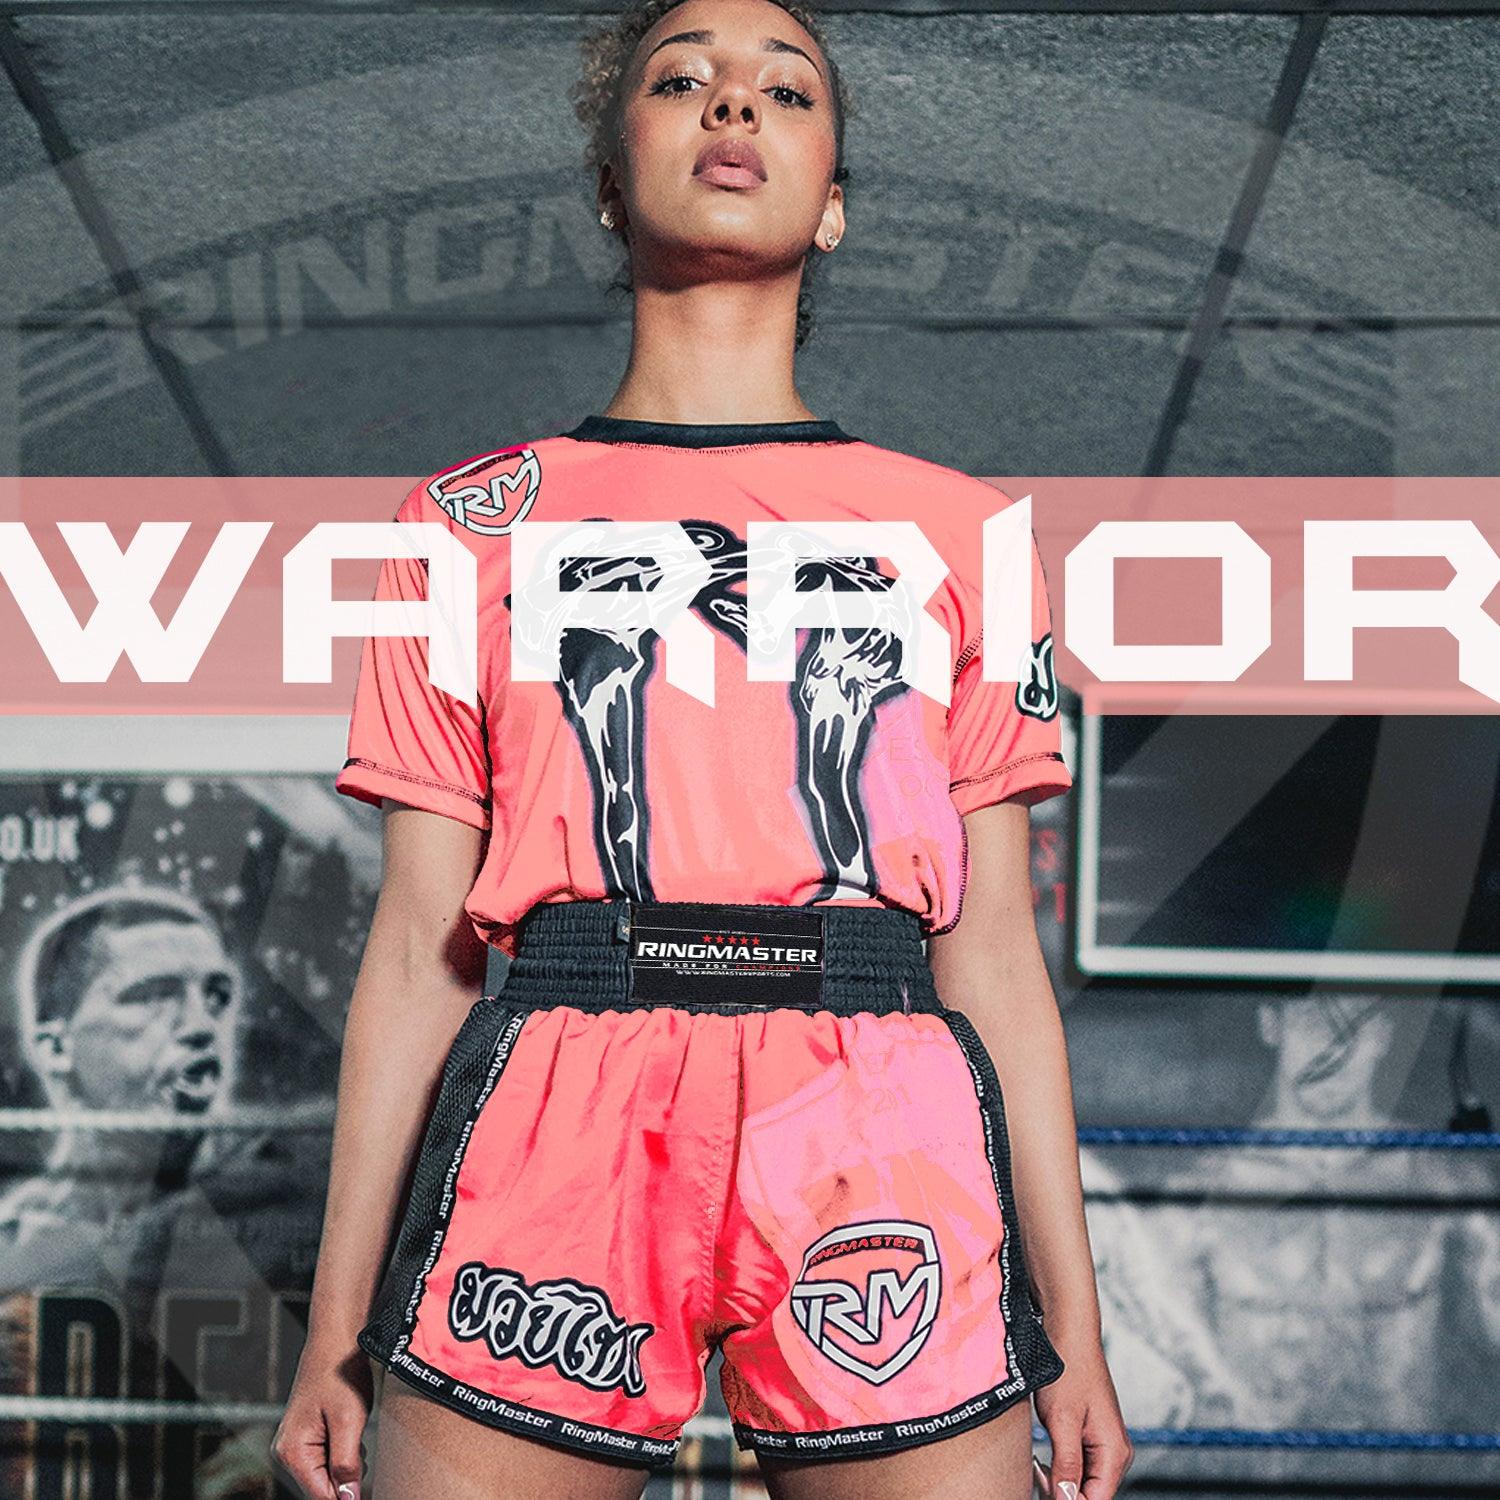 RingMaster Sports Warrior Thai / Kickboxing Shorts Salmon Pink - RINGMASTER SPORTS - Made For Champions